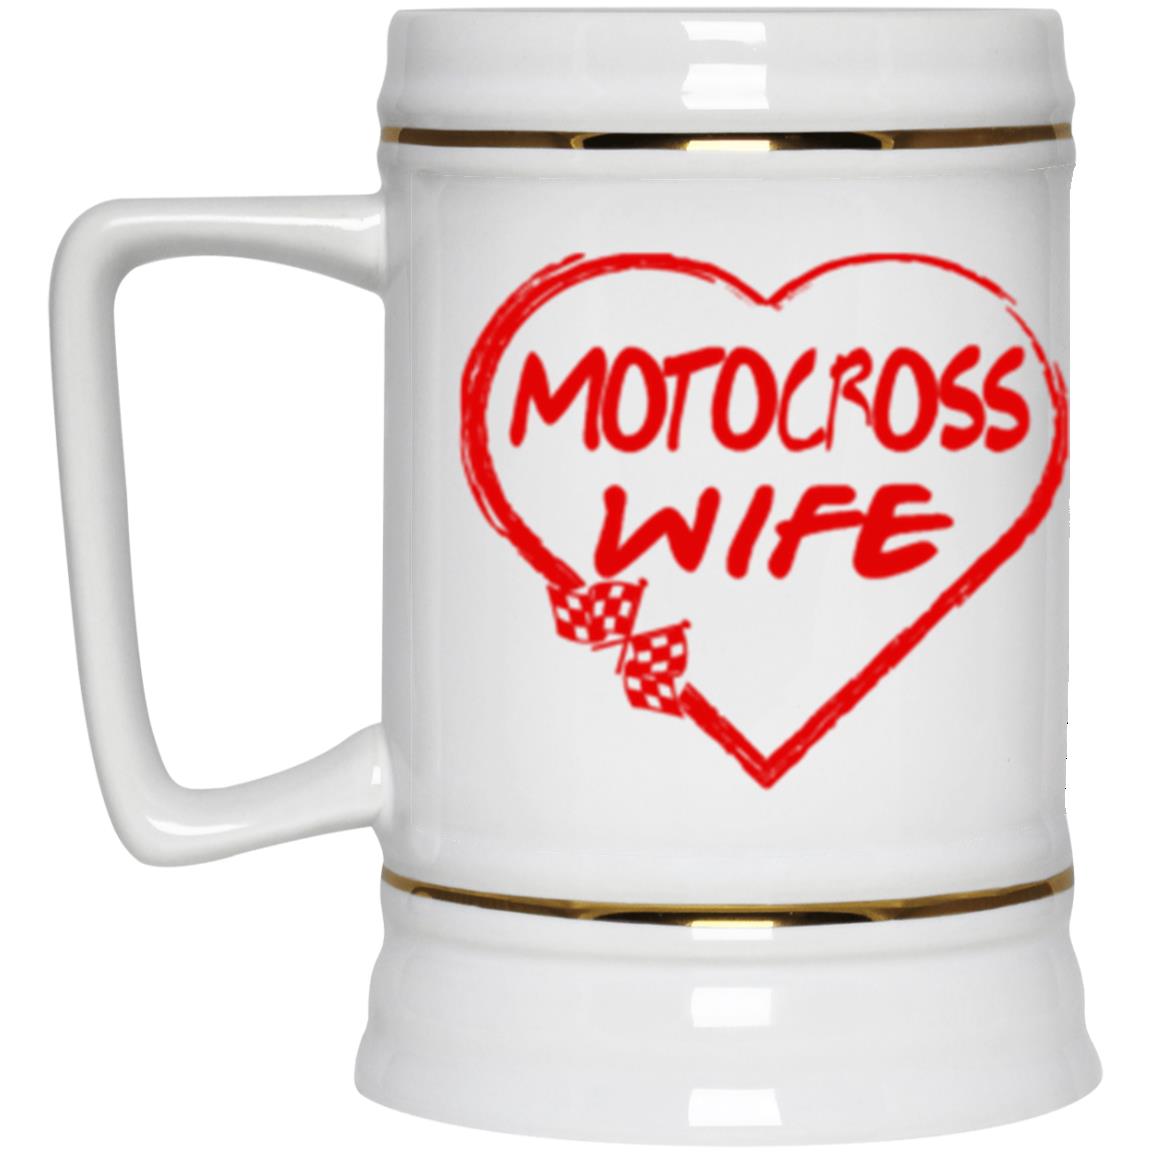 Motocross Wife Beer Stein 22oz.